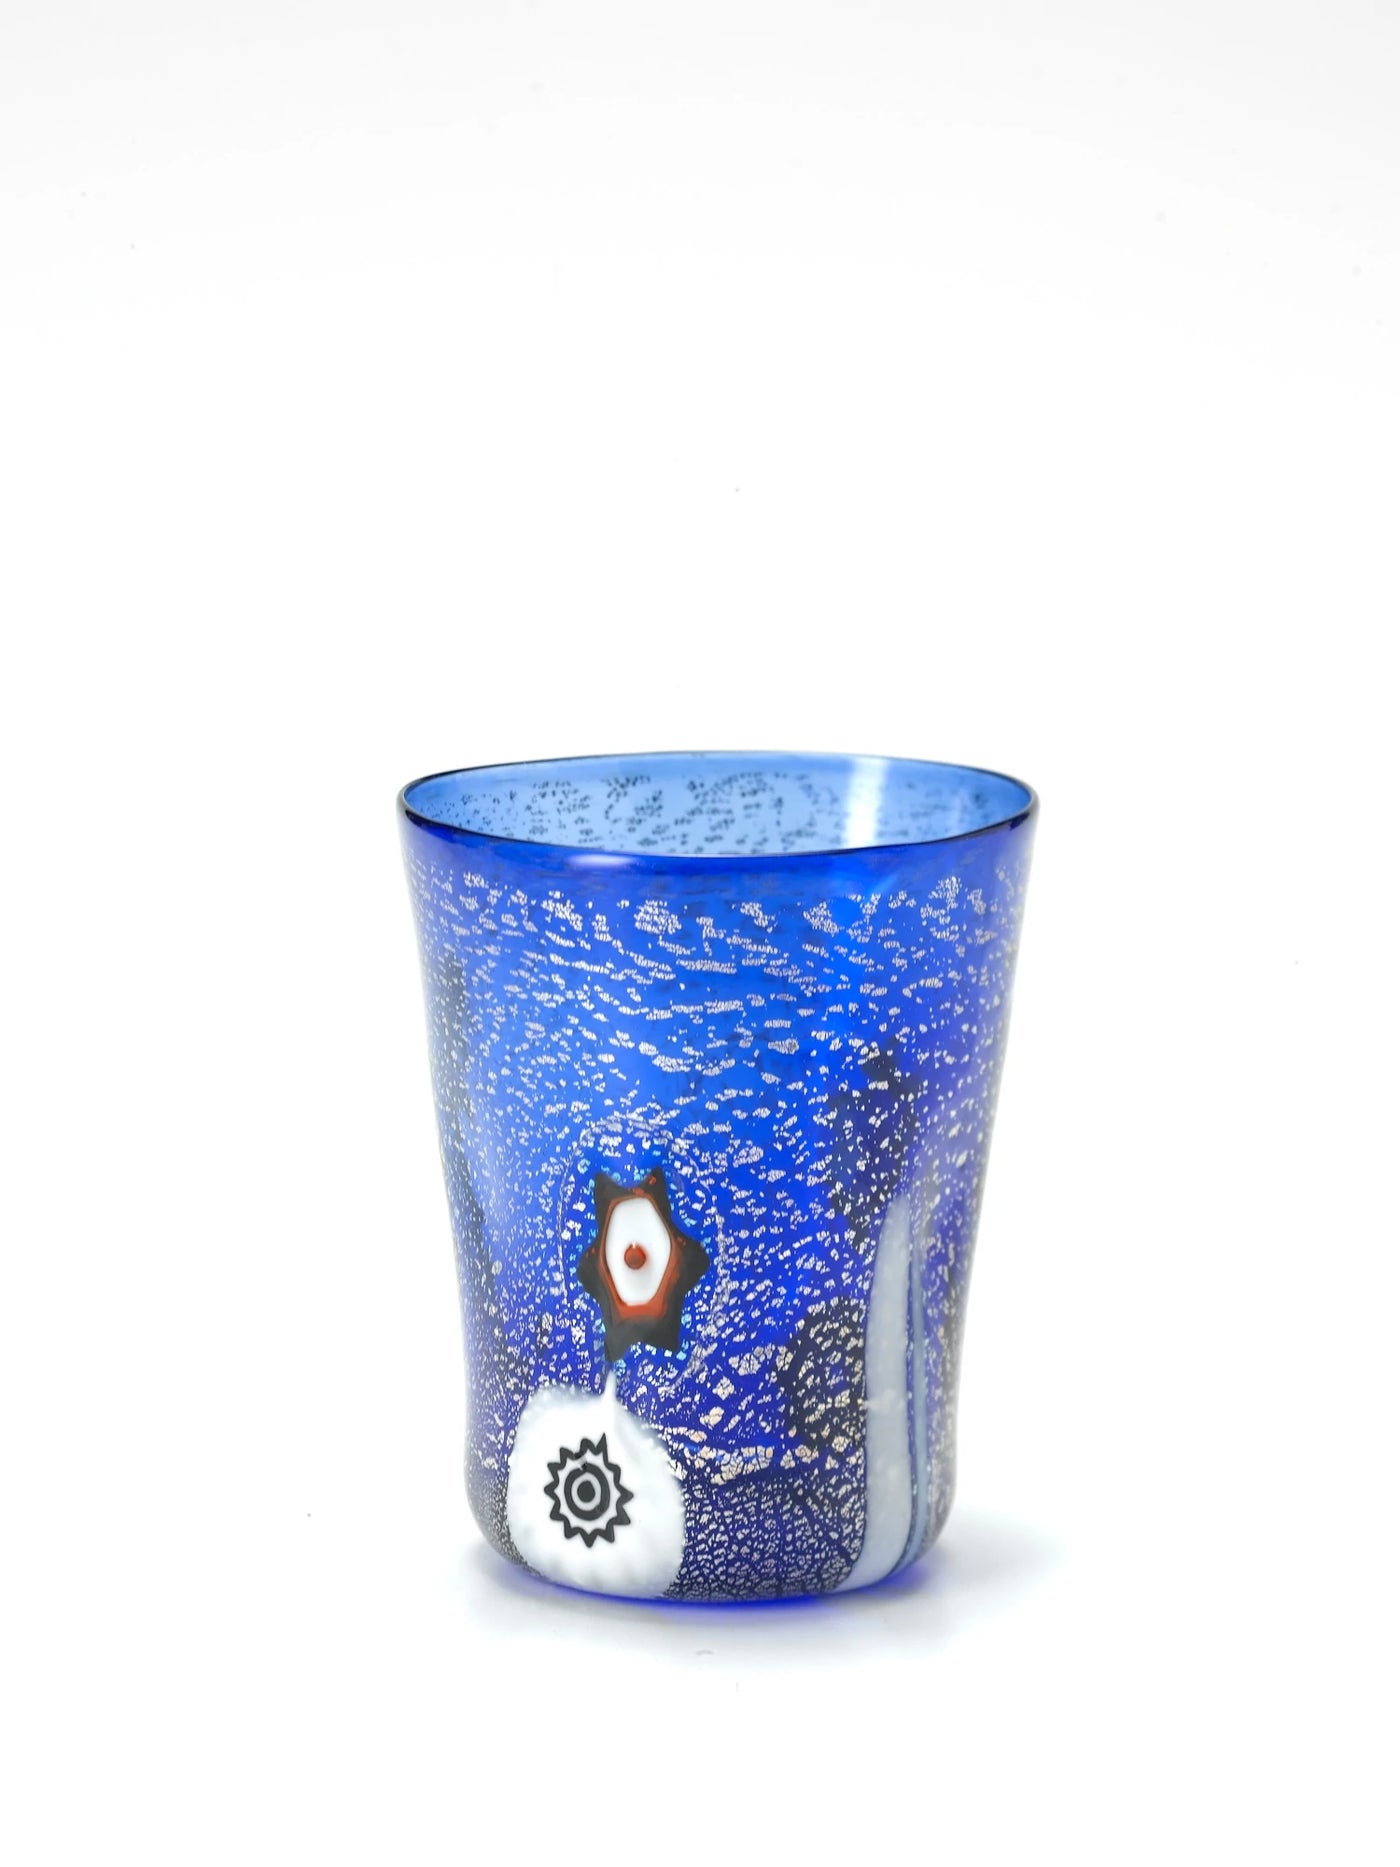 Murano Glass in Blue